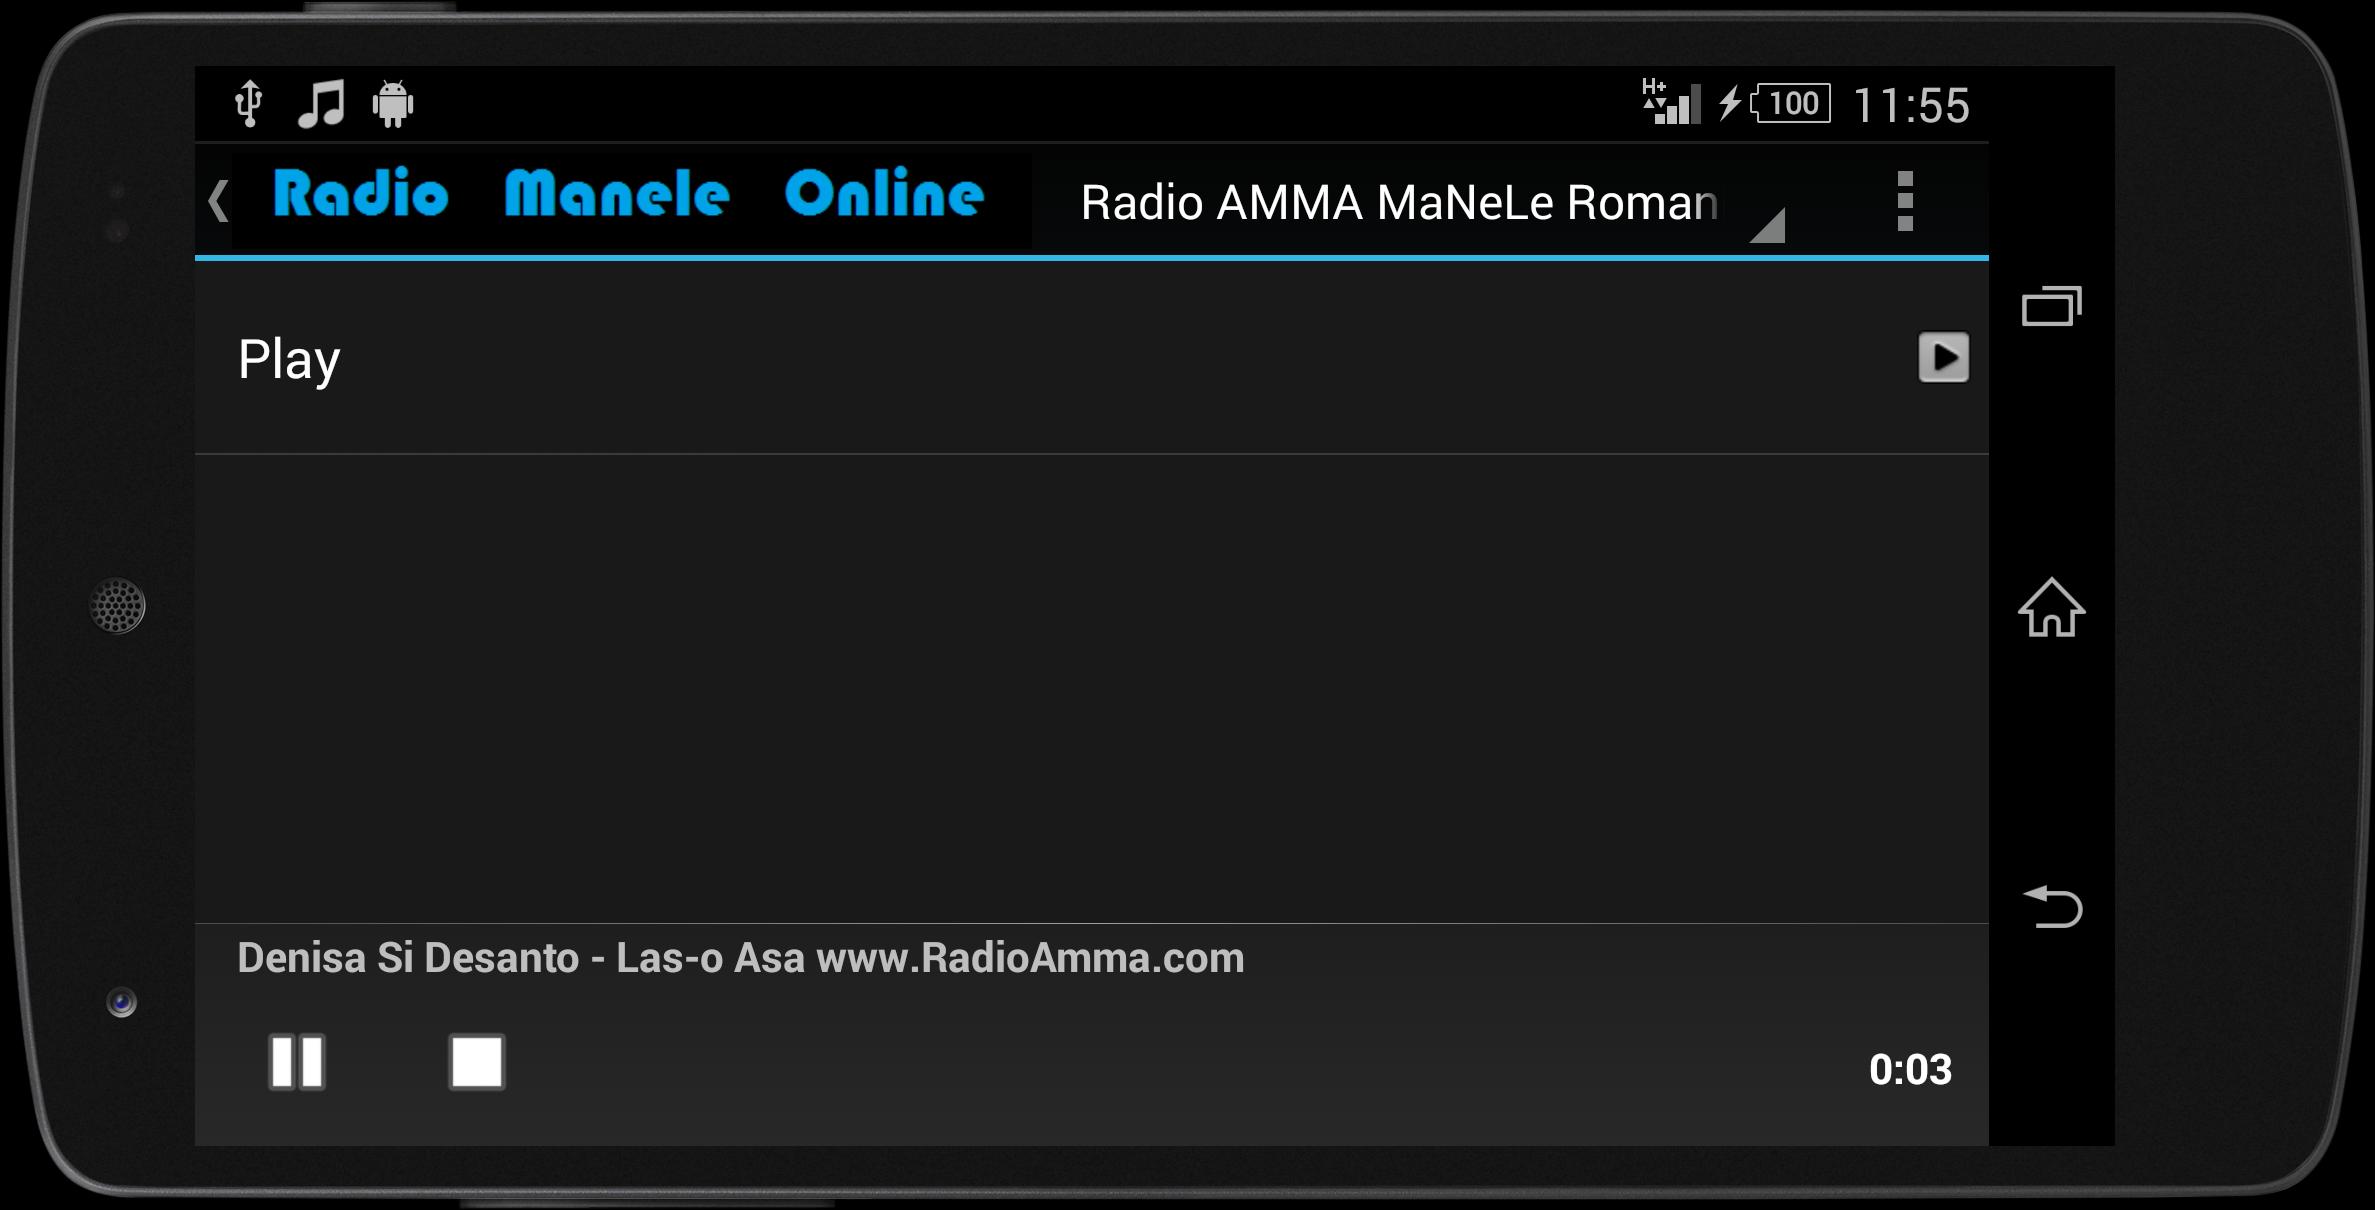 Manele Radio Online for Android - APK Download